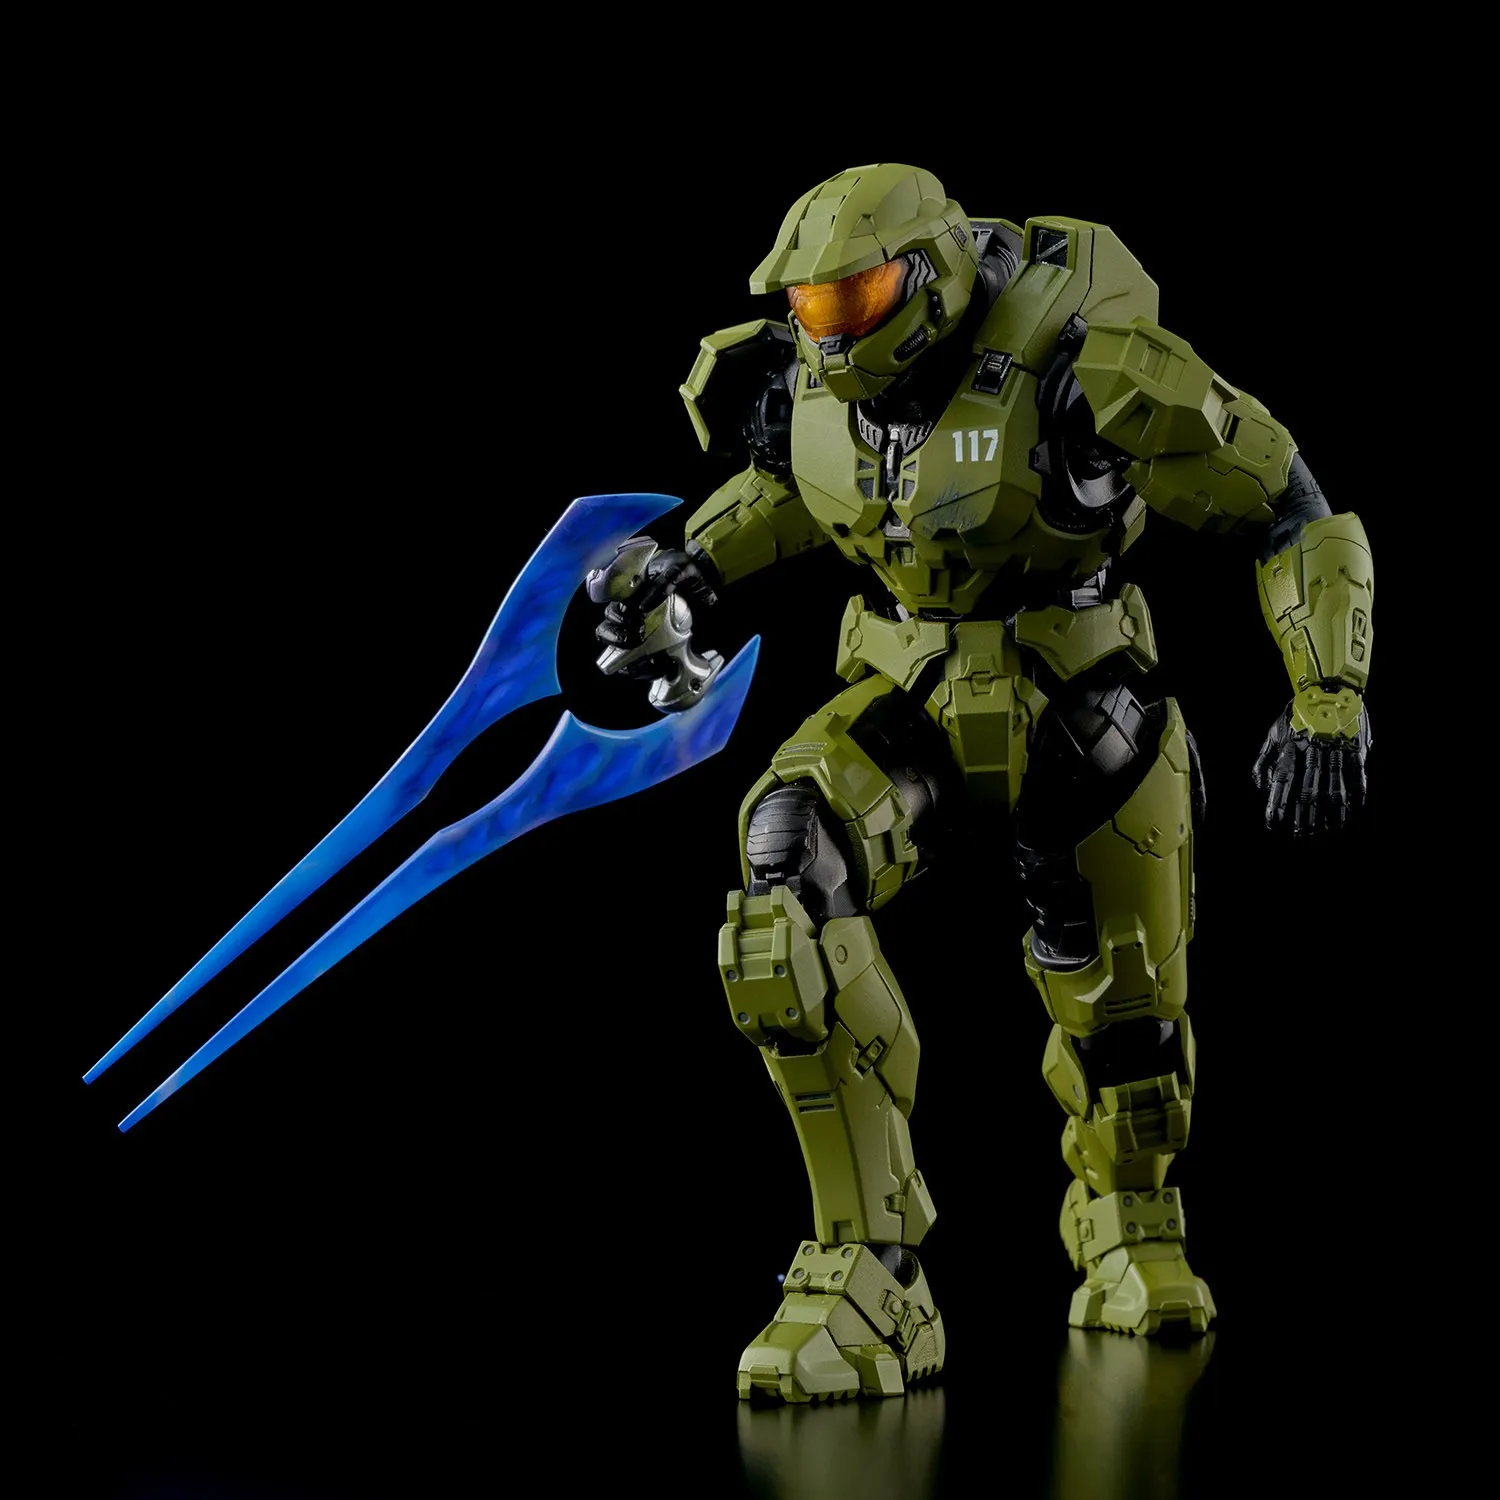 

Re: Edit Halo 1/12 Scale Master Chief Infinate Mjolnir Mark VI Gen3 Halo Infinite Action Figure 17.5CM 6" Collectible Model Toy